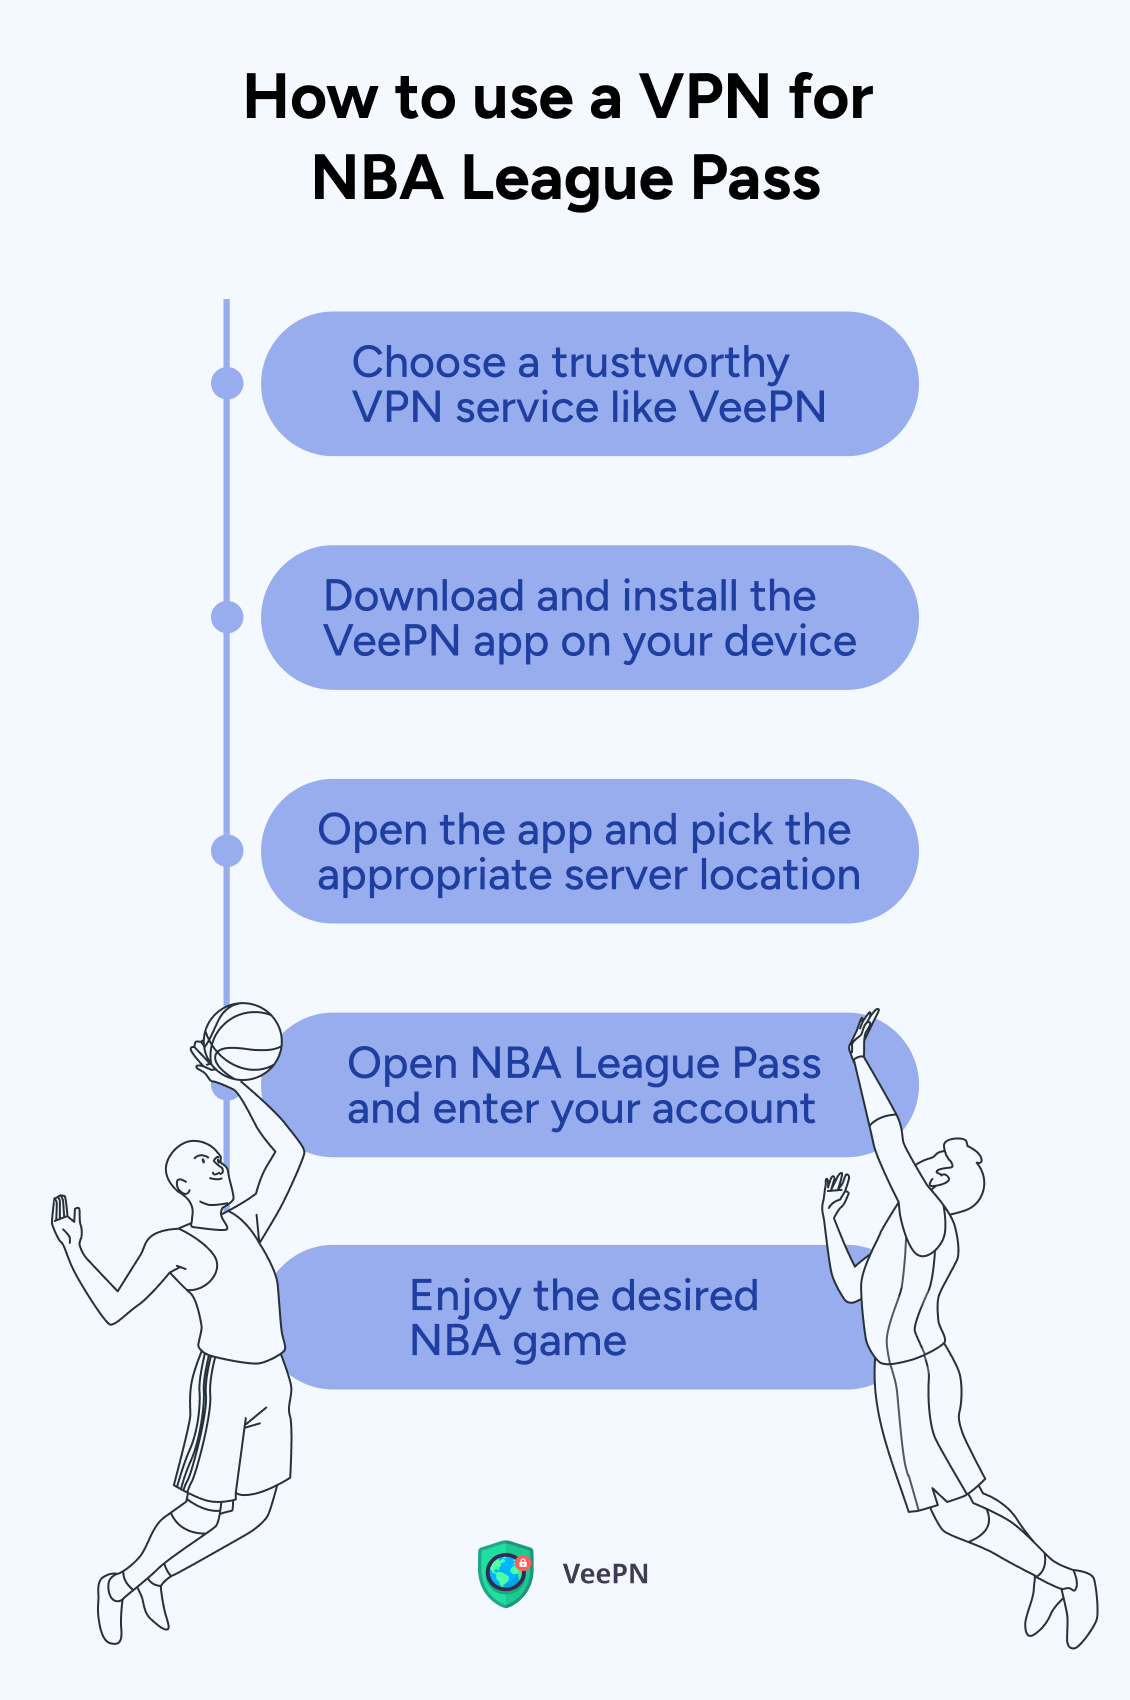 How do I buy NBA League Pass with VPN?